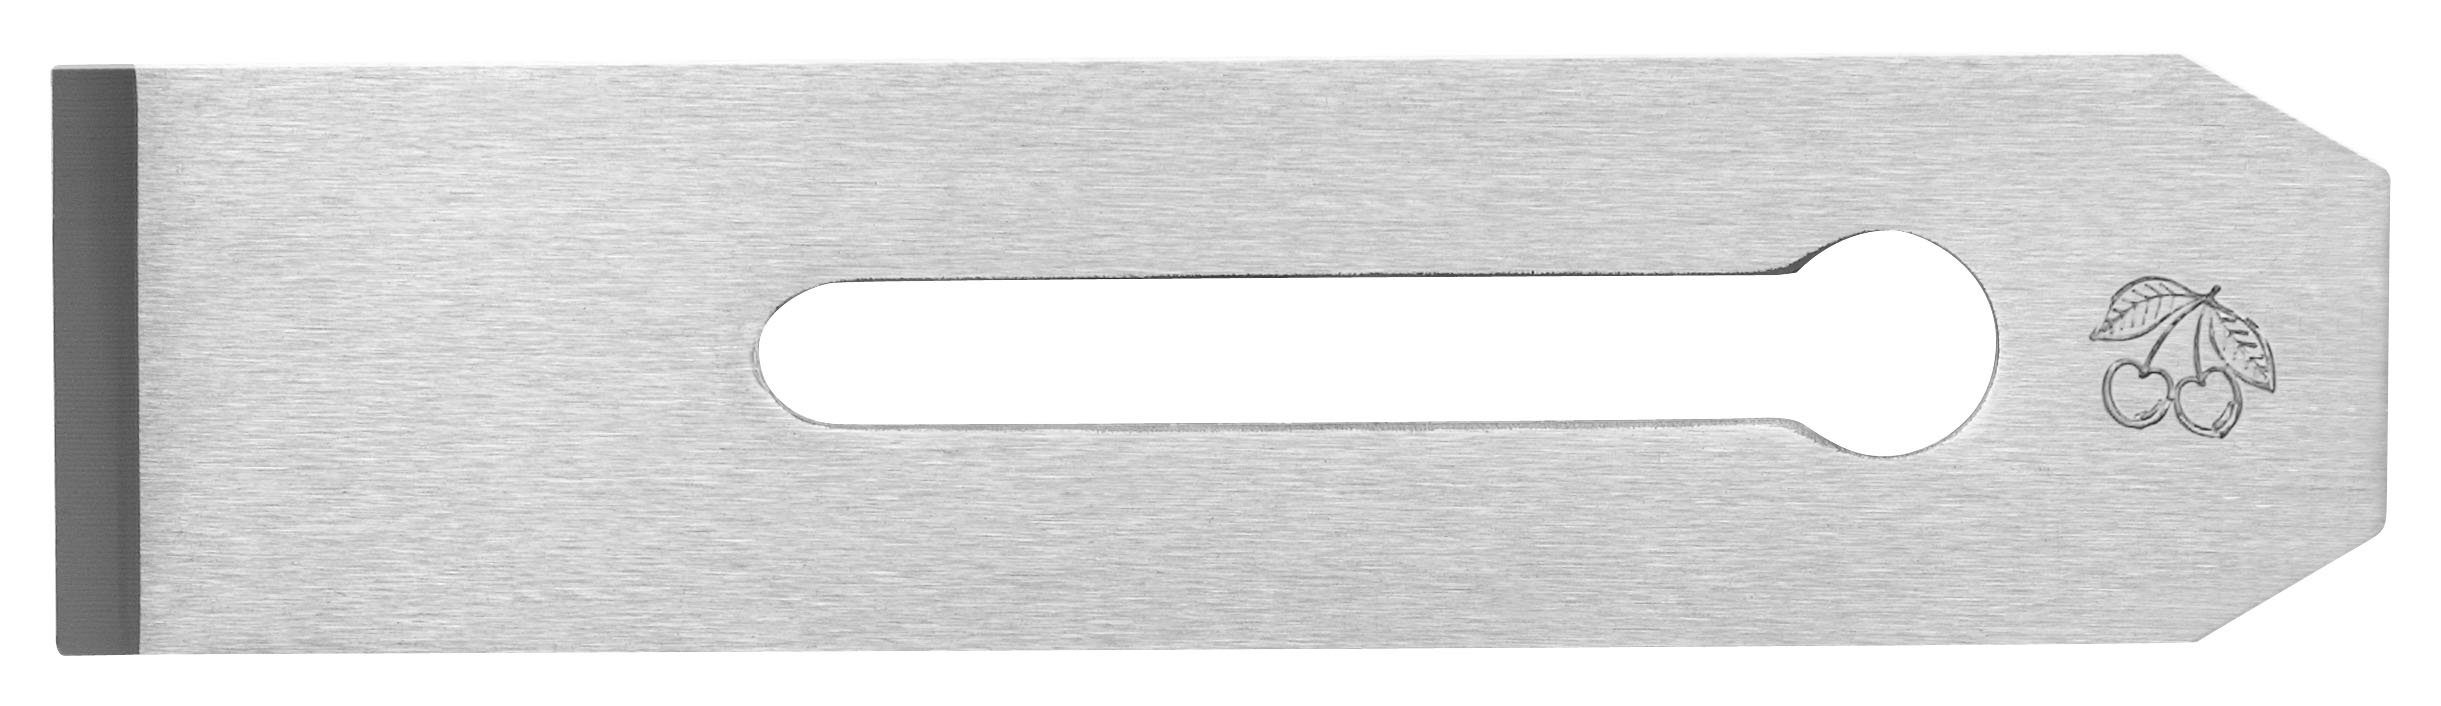 Kirschen Hobelmesser KIRSCHEN Lochhobeleisen - 54mm